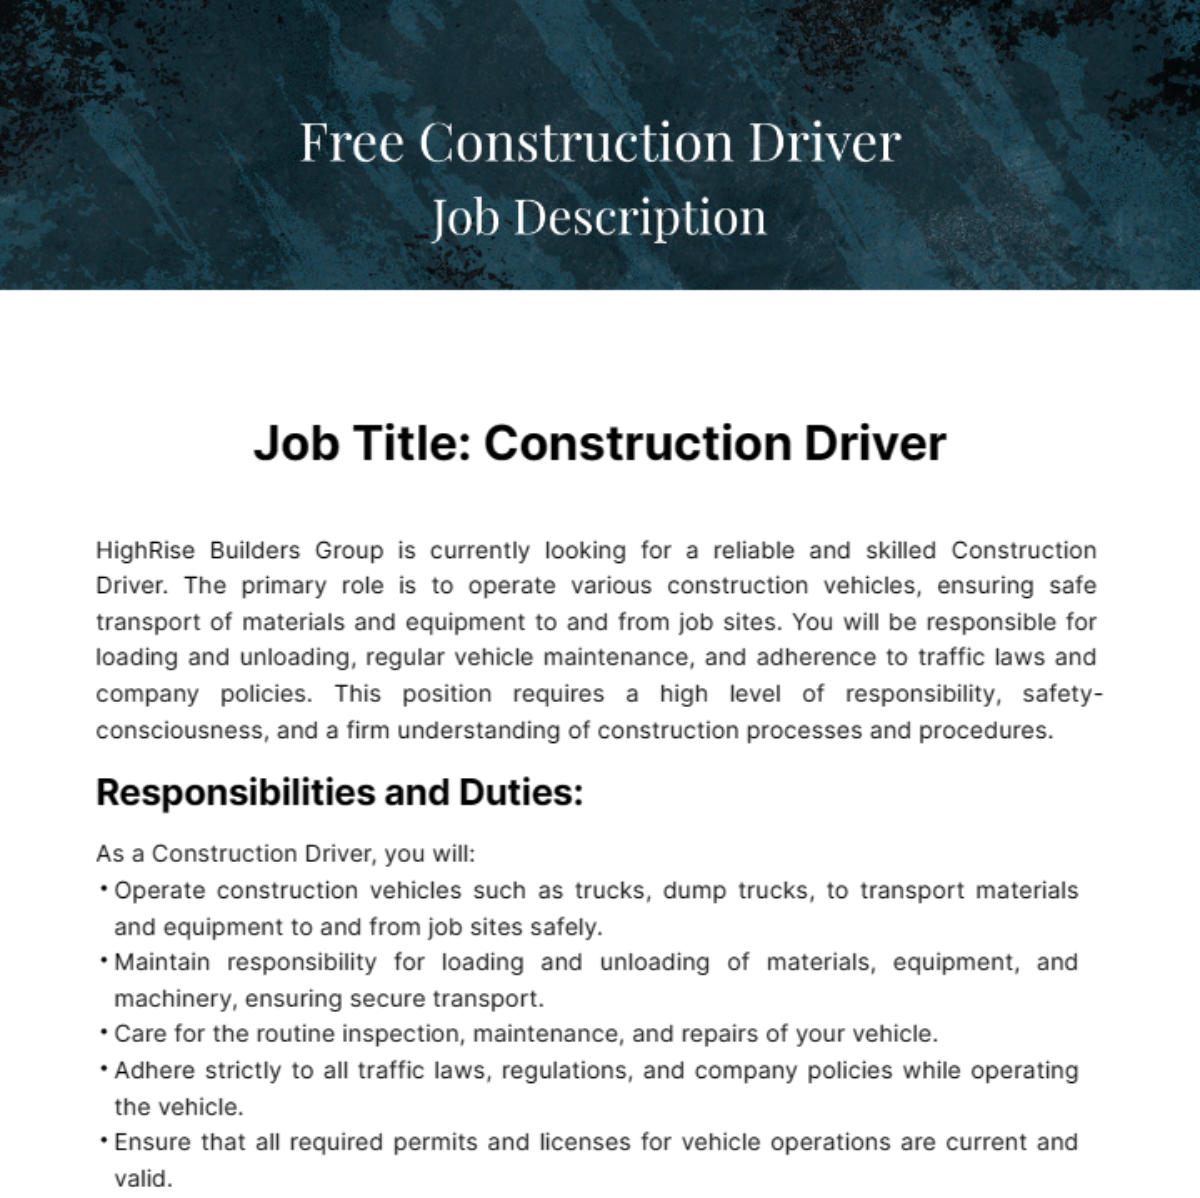 Free Construction Driver Job Description Template